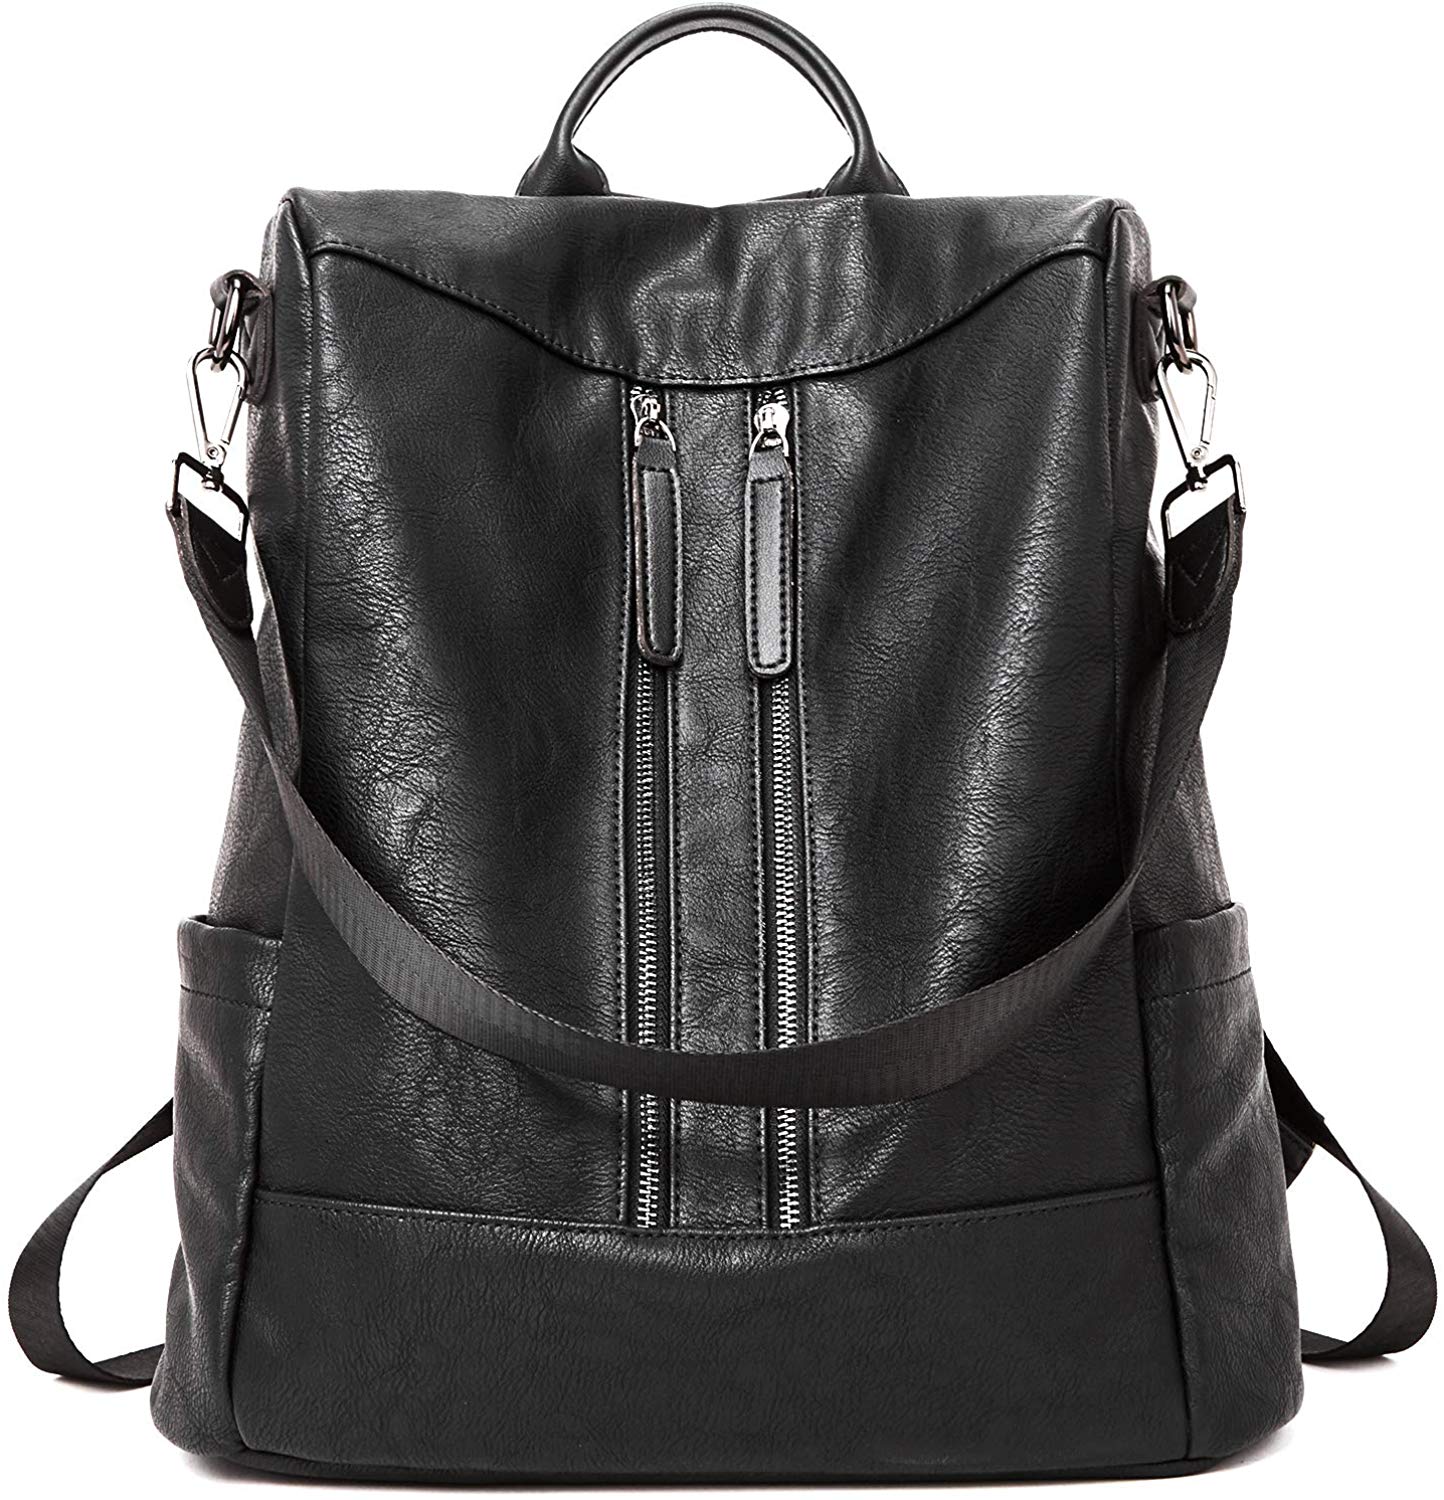 BROMEN Backpack Purse for Women Leather Anti-theft Travel Backpack Fashion Shoulder Bag 